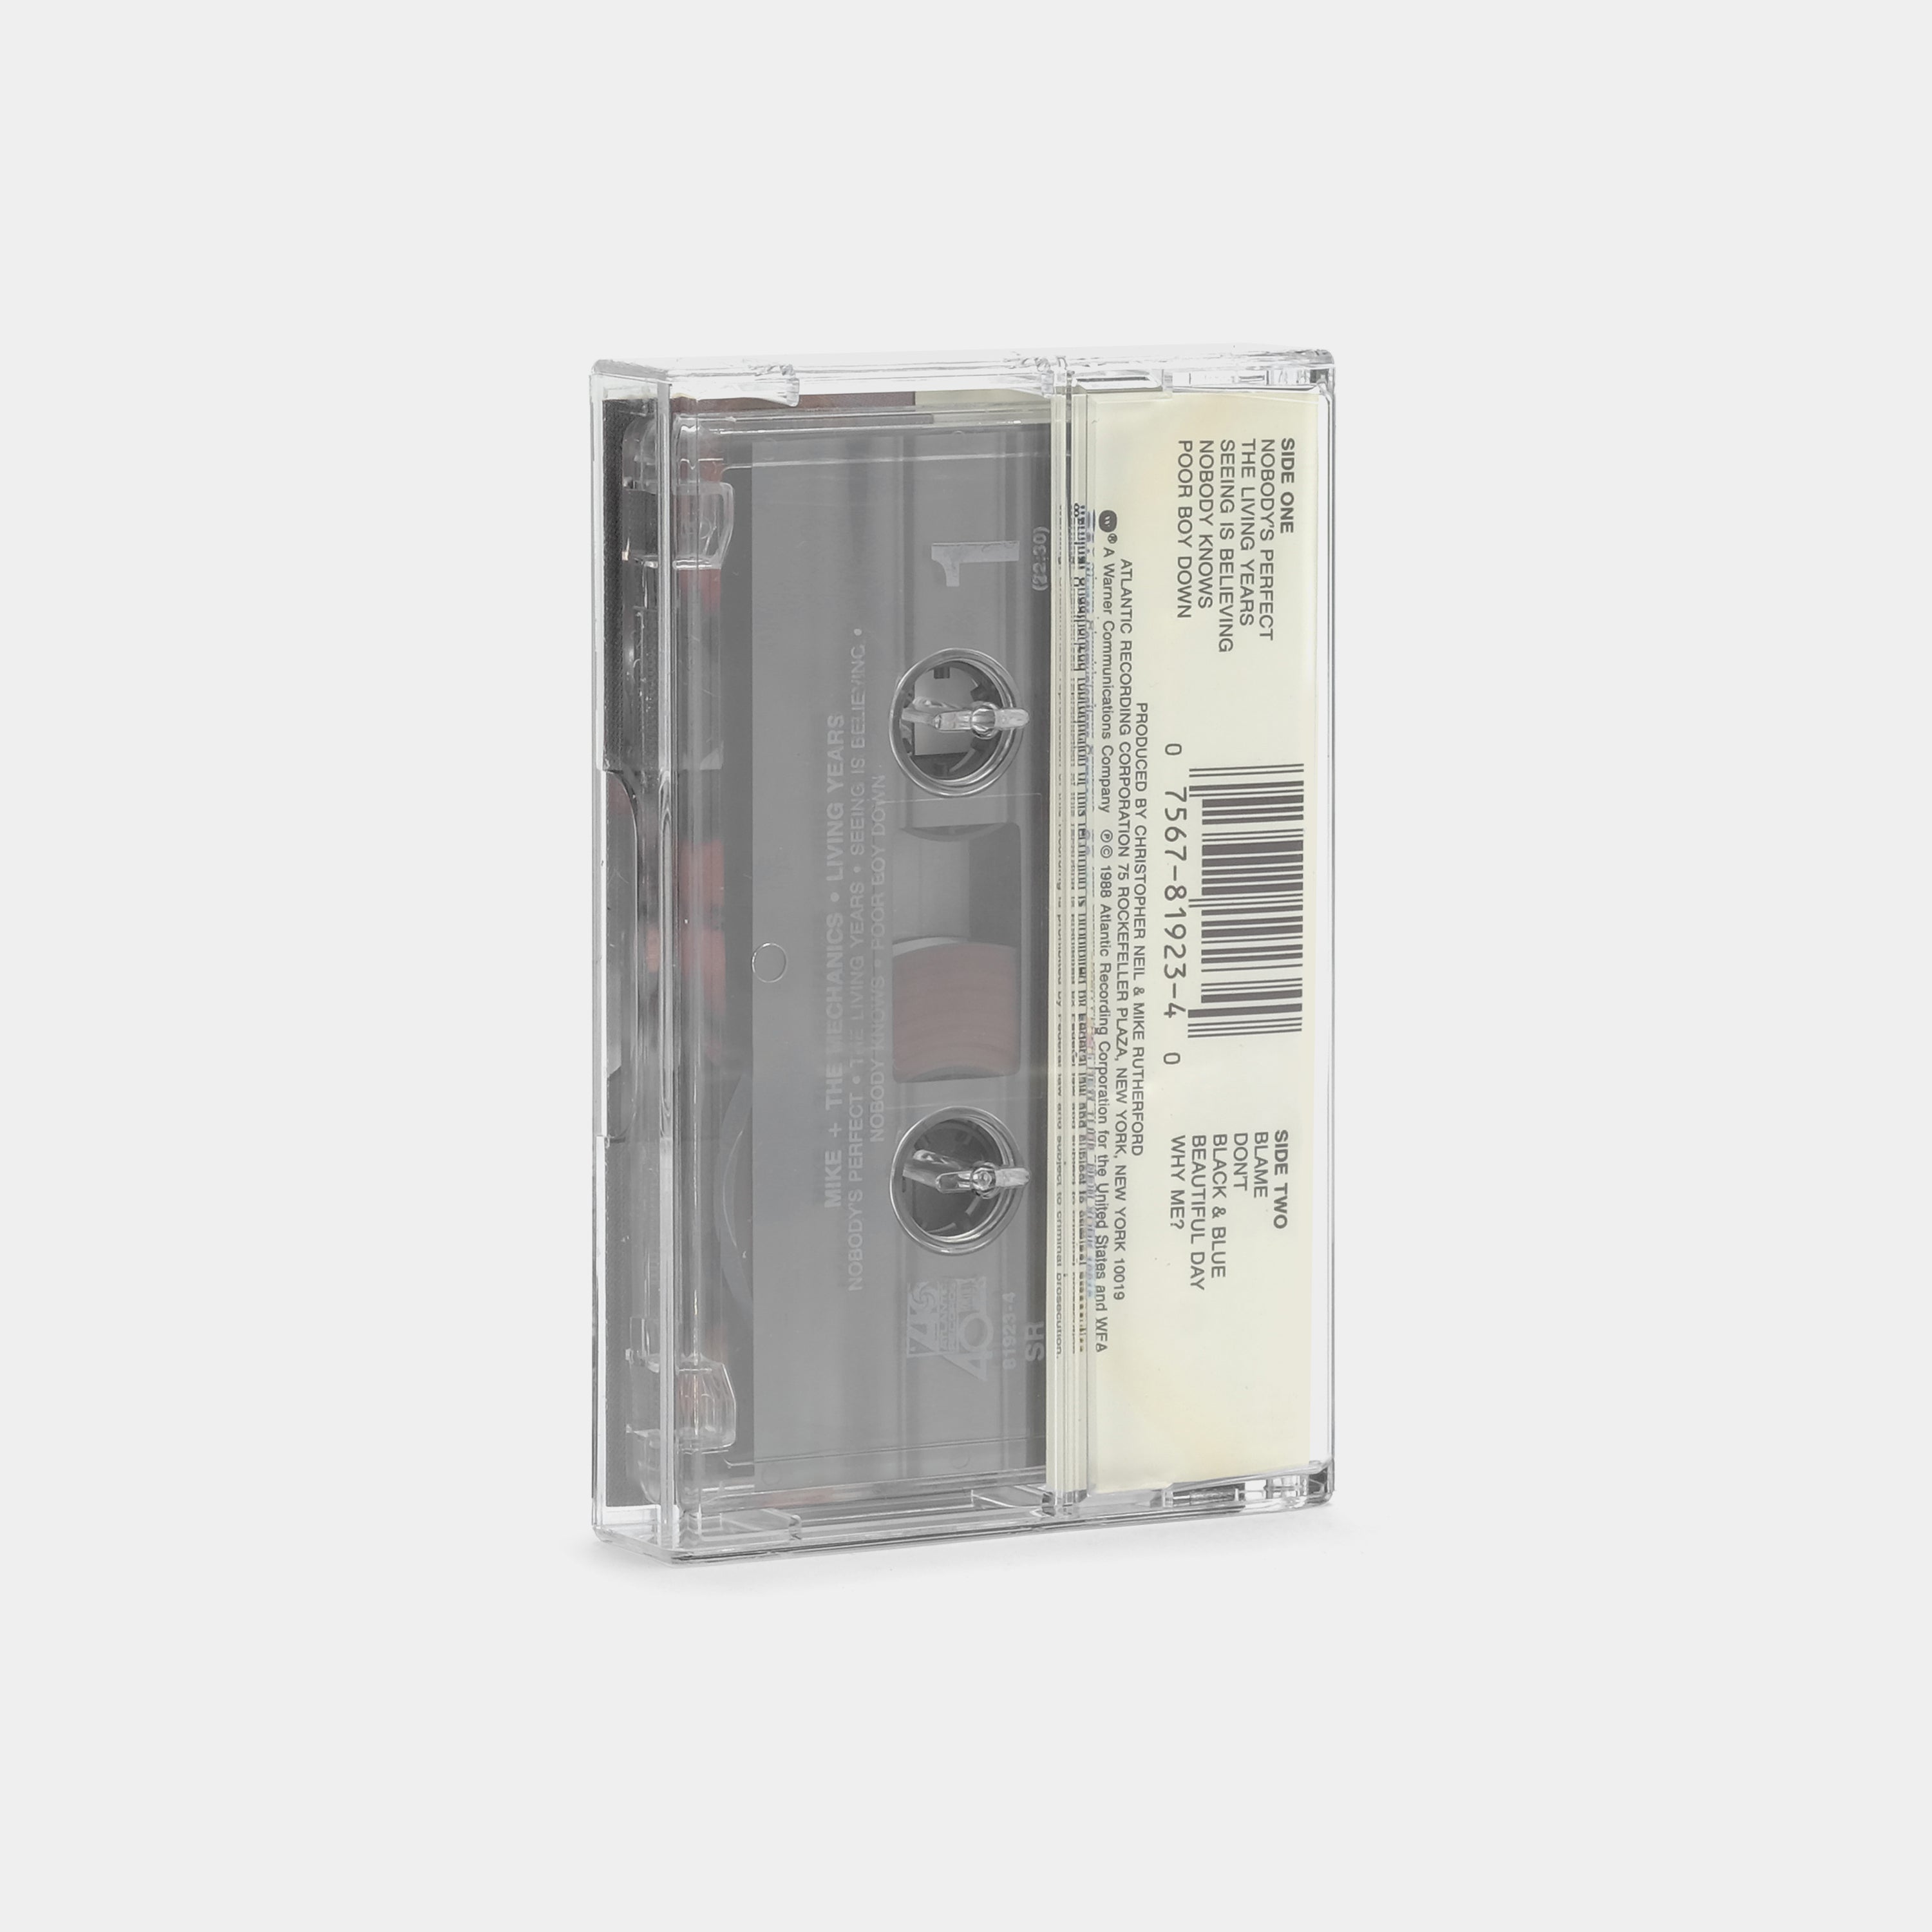 Mike & The Mechanics - Living Years Cassette Tape